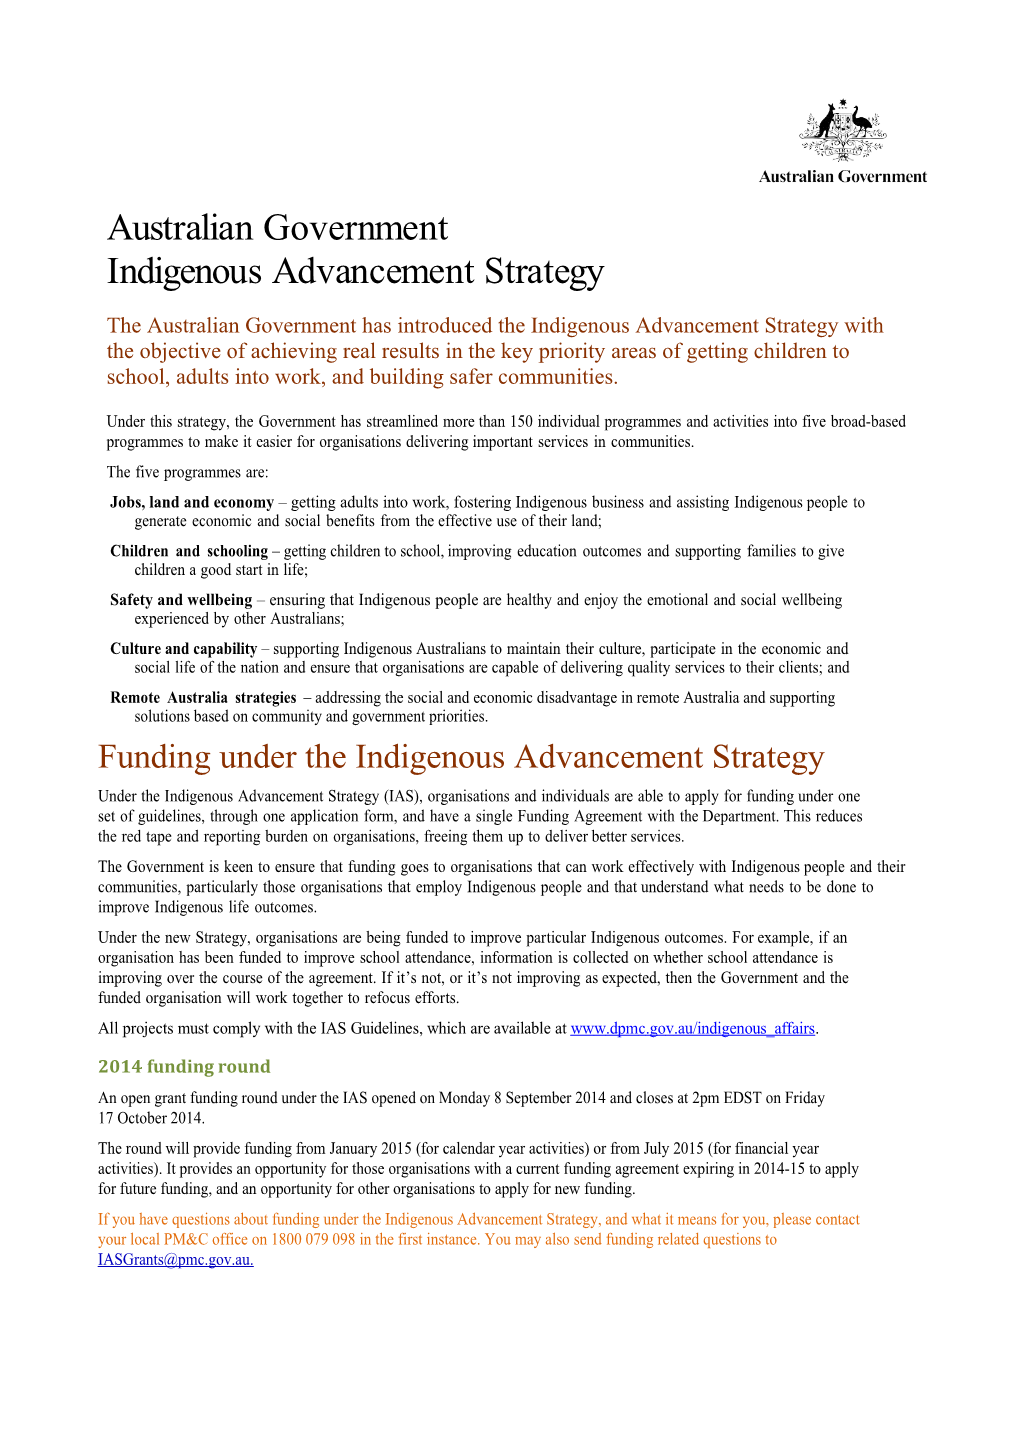 Indigenous Advancement Strategy Fact Sheet